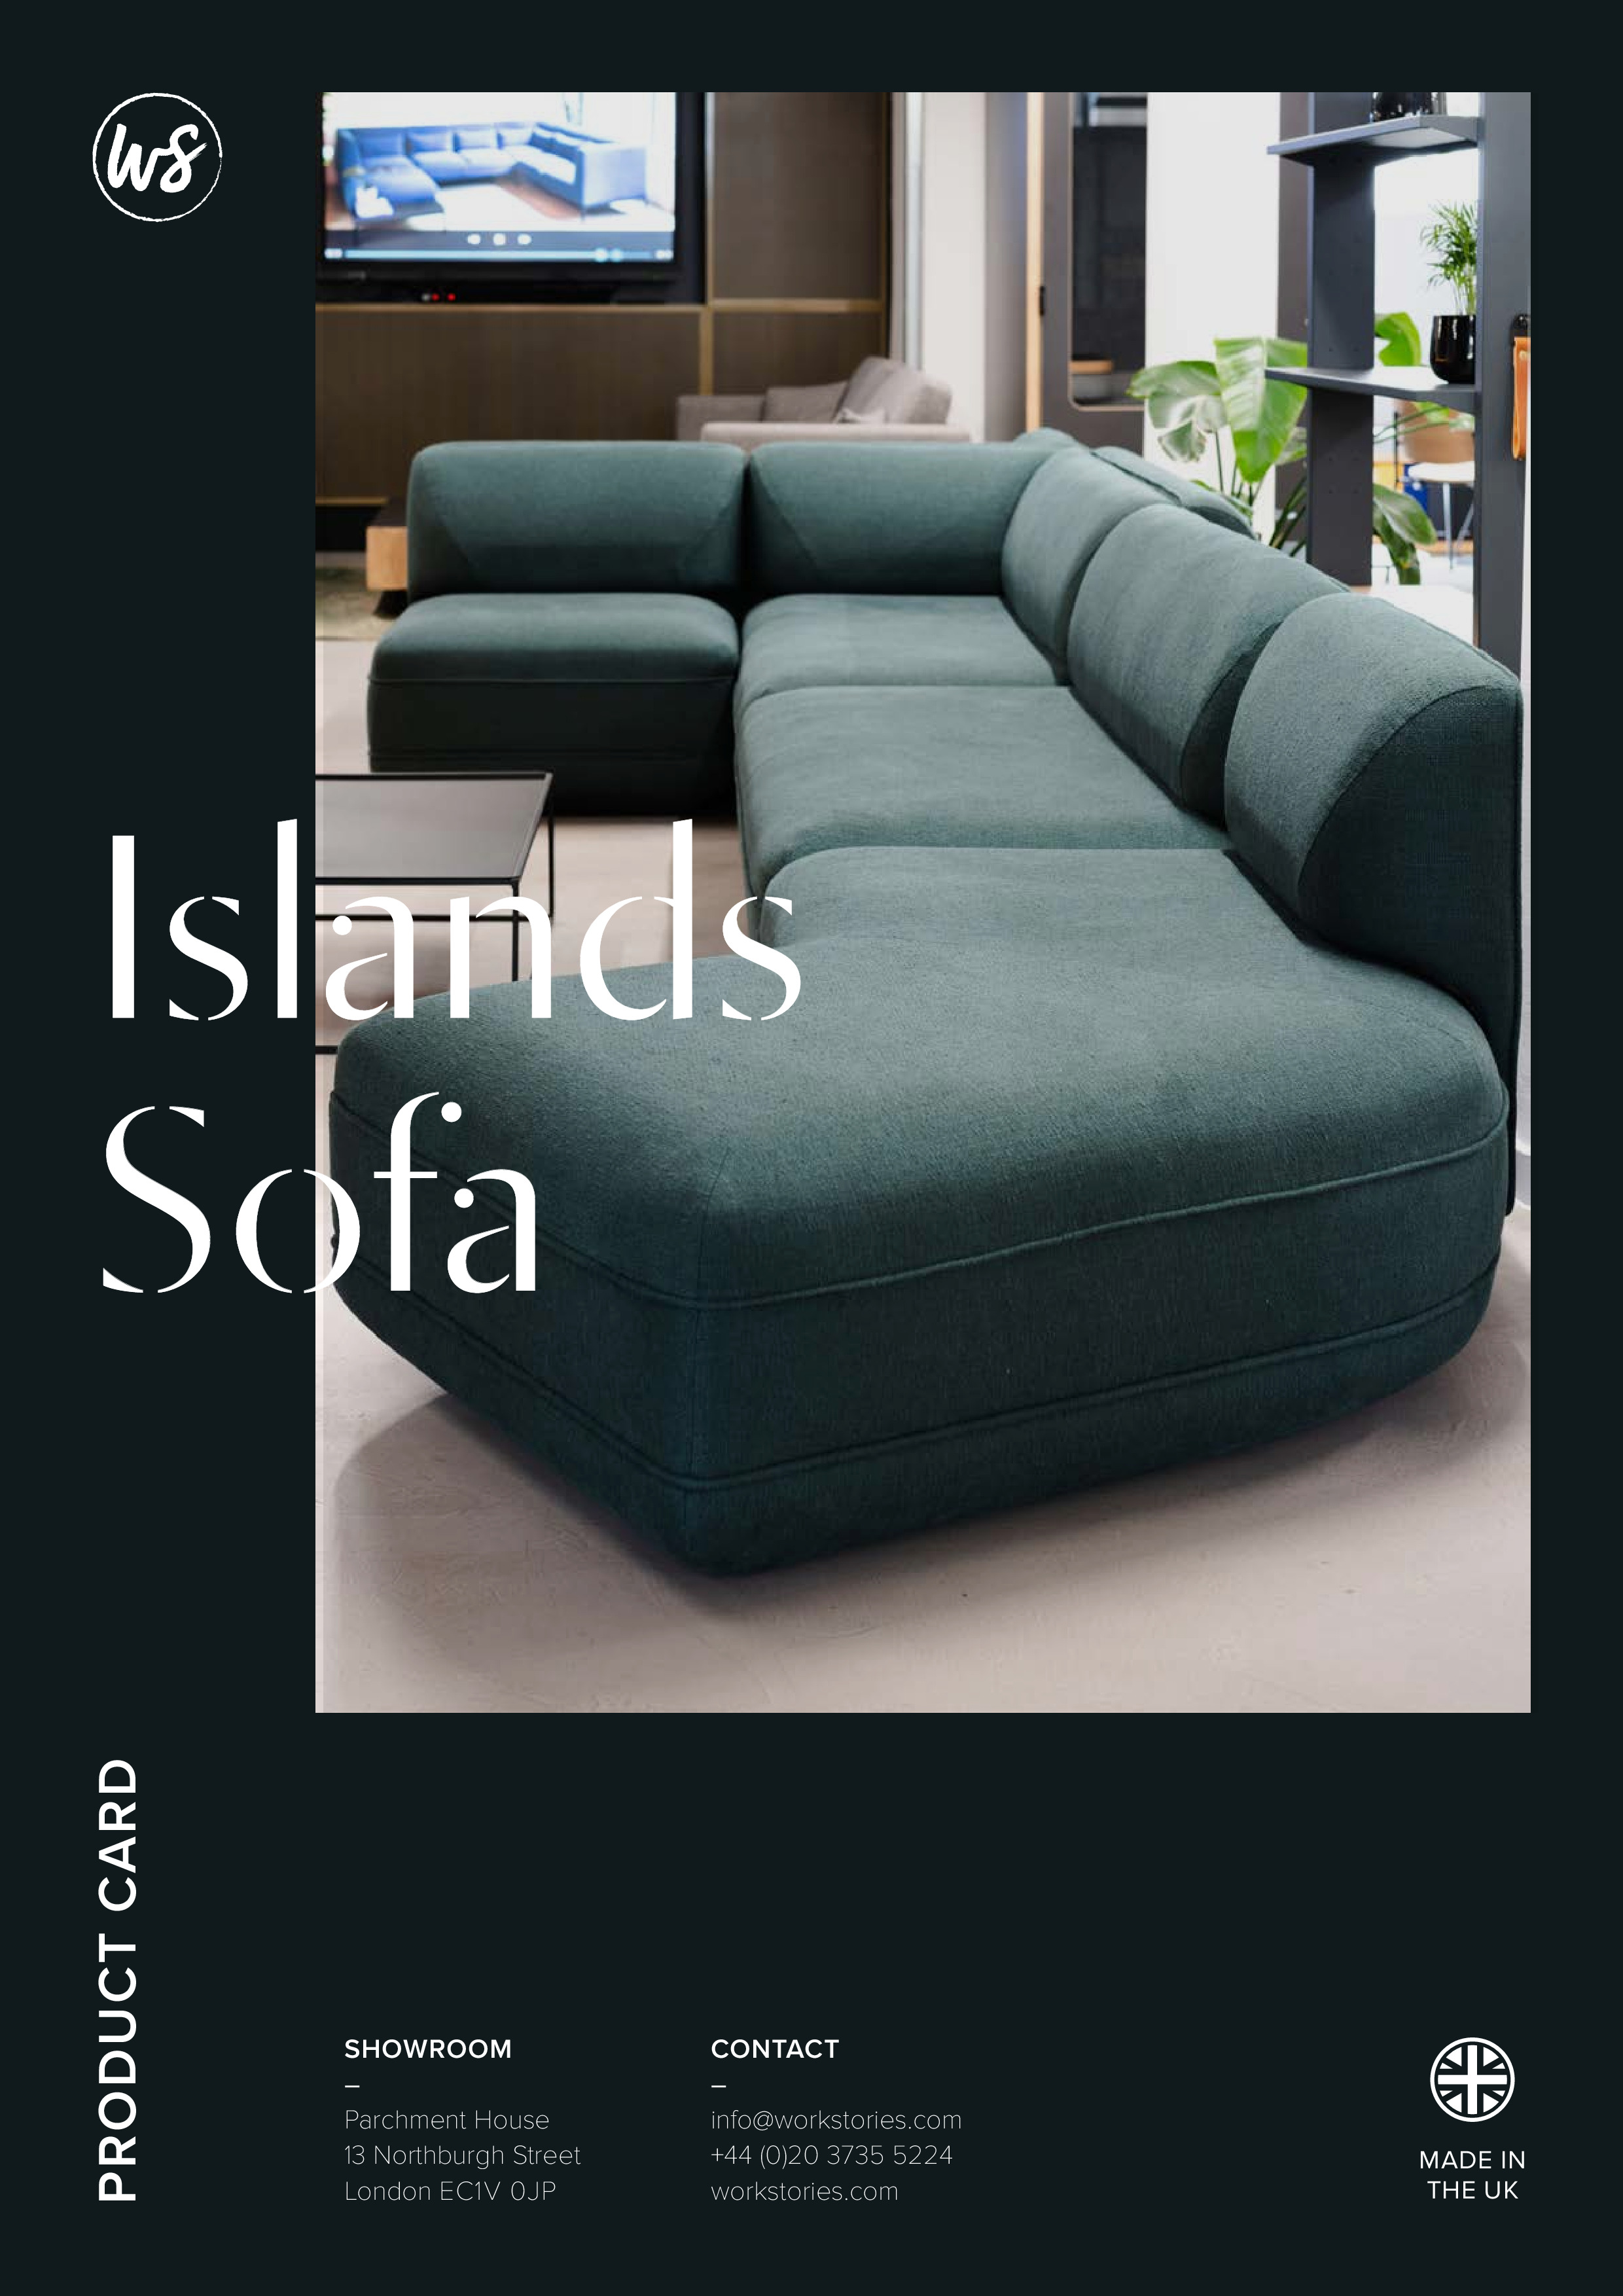 WS - Islands Sofa - Product card